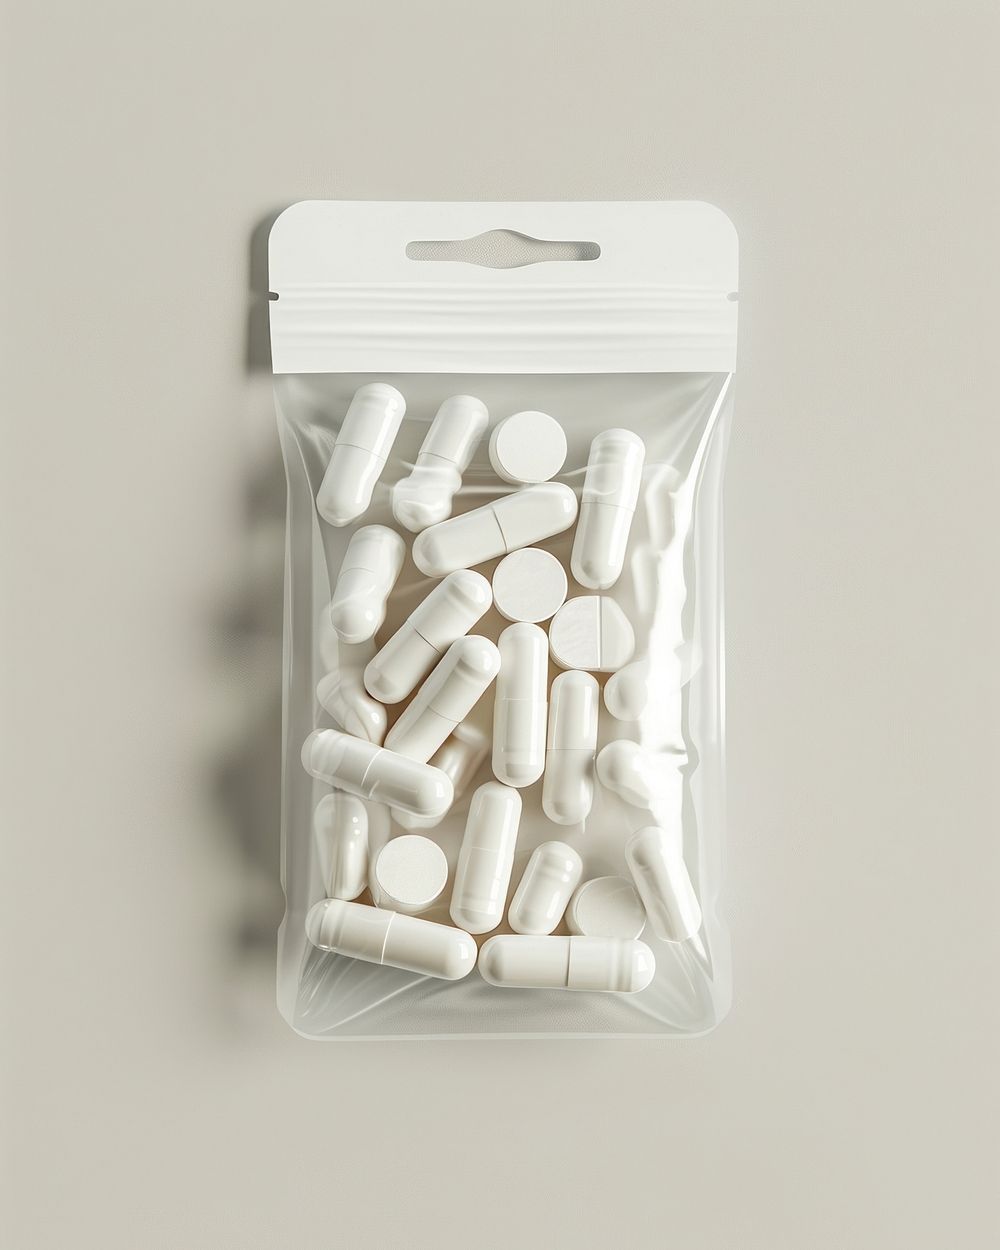 Pill label white medication.